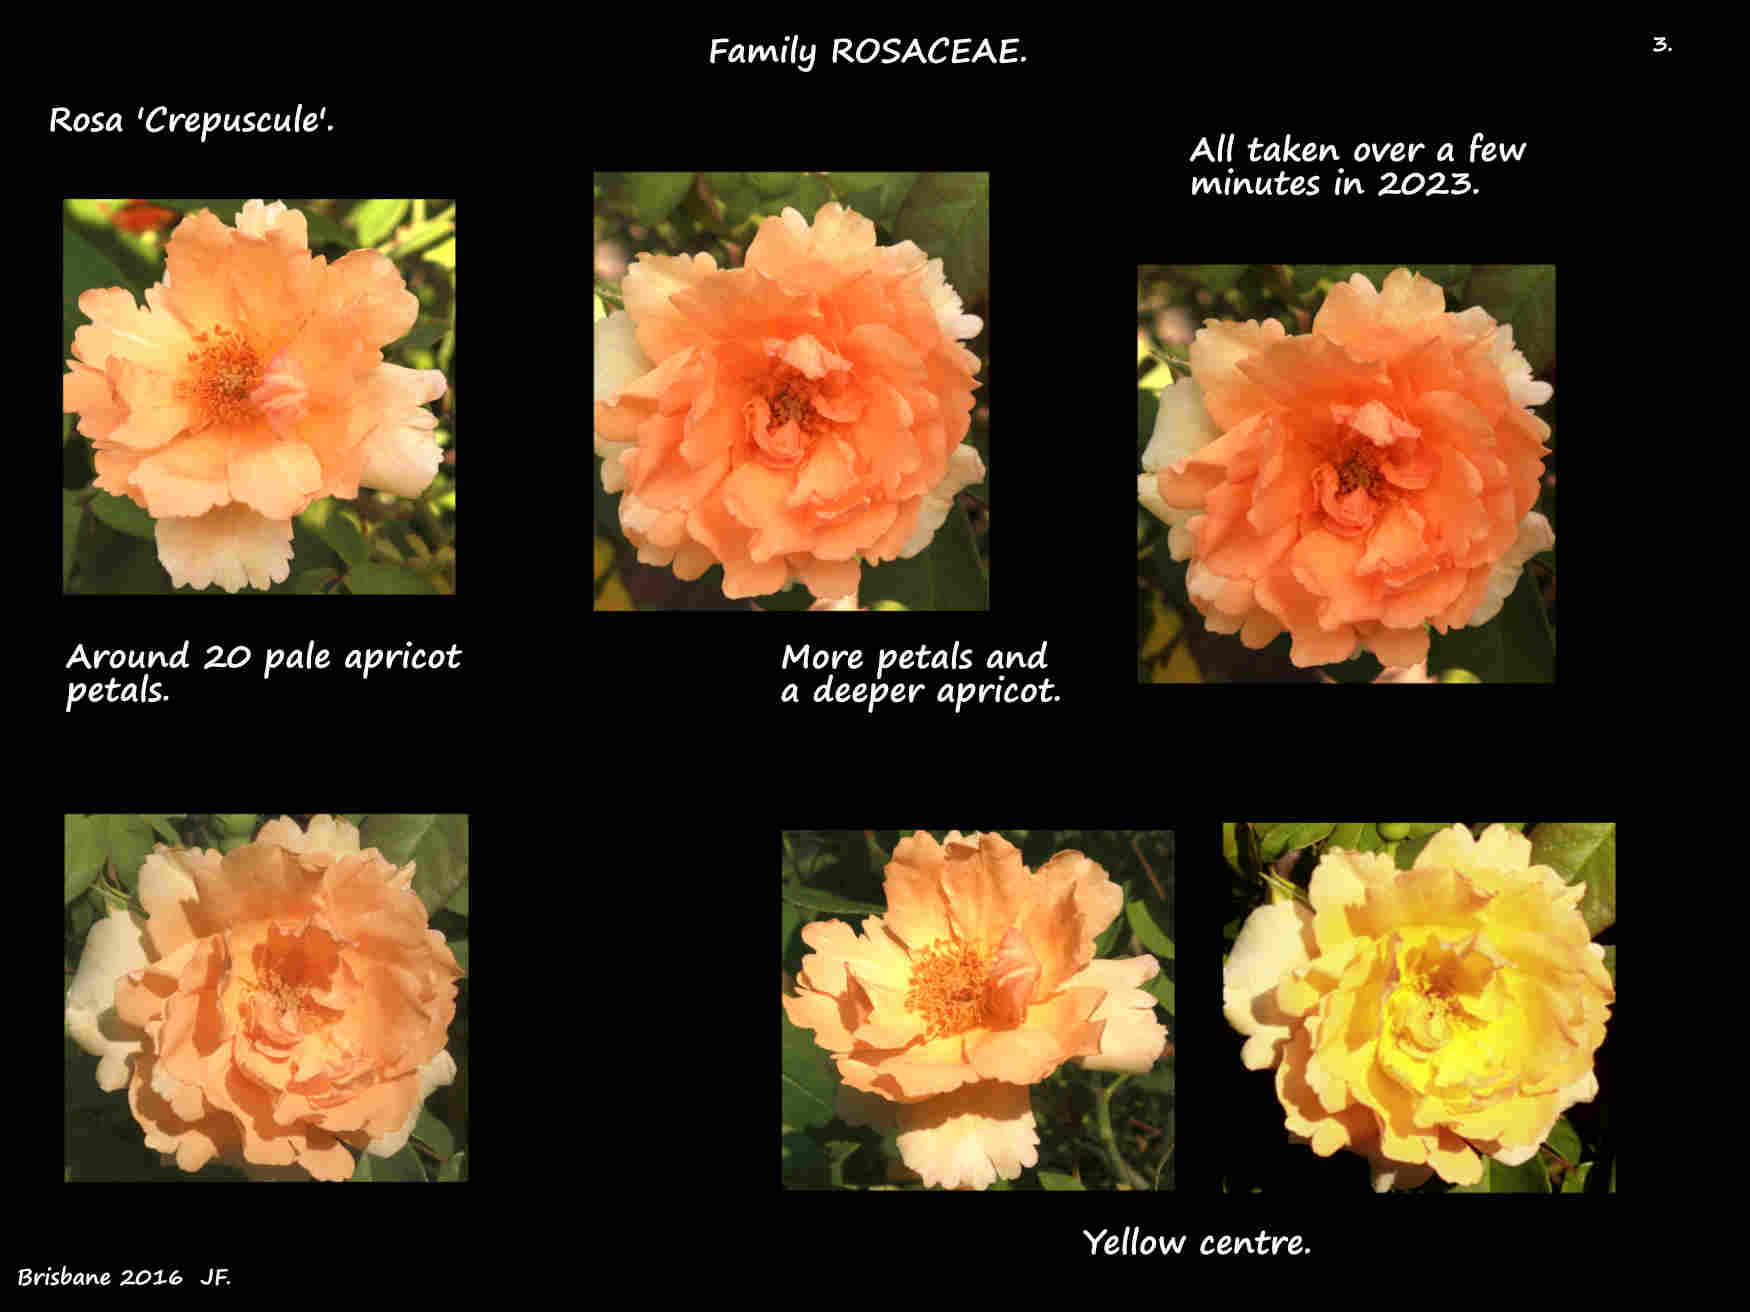 3 Ruffled petals on Rosa 'Crepuscule' flowers